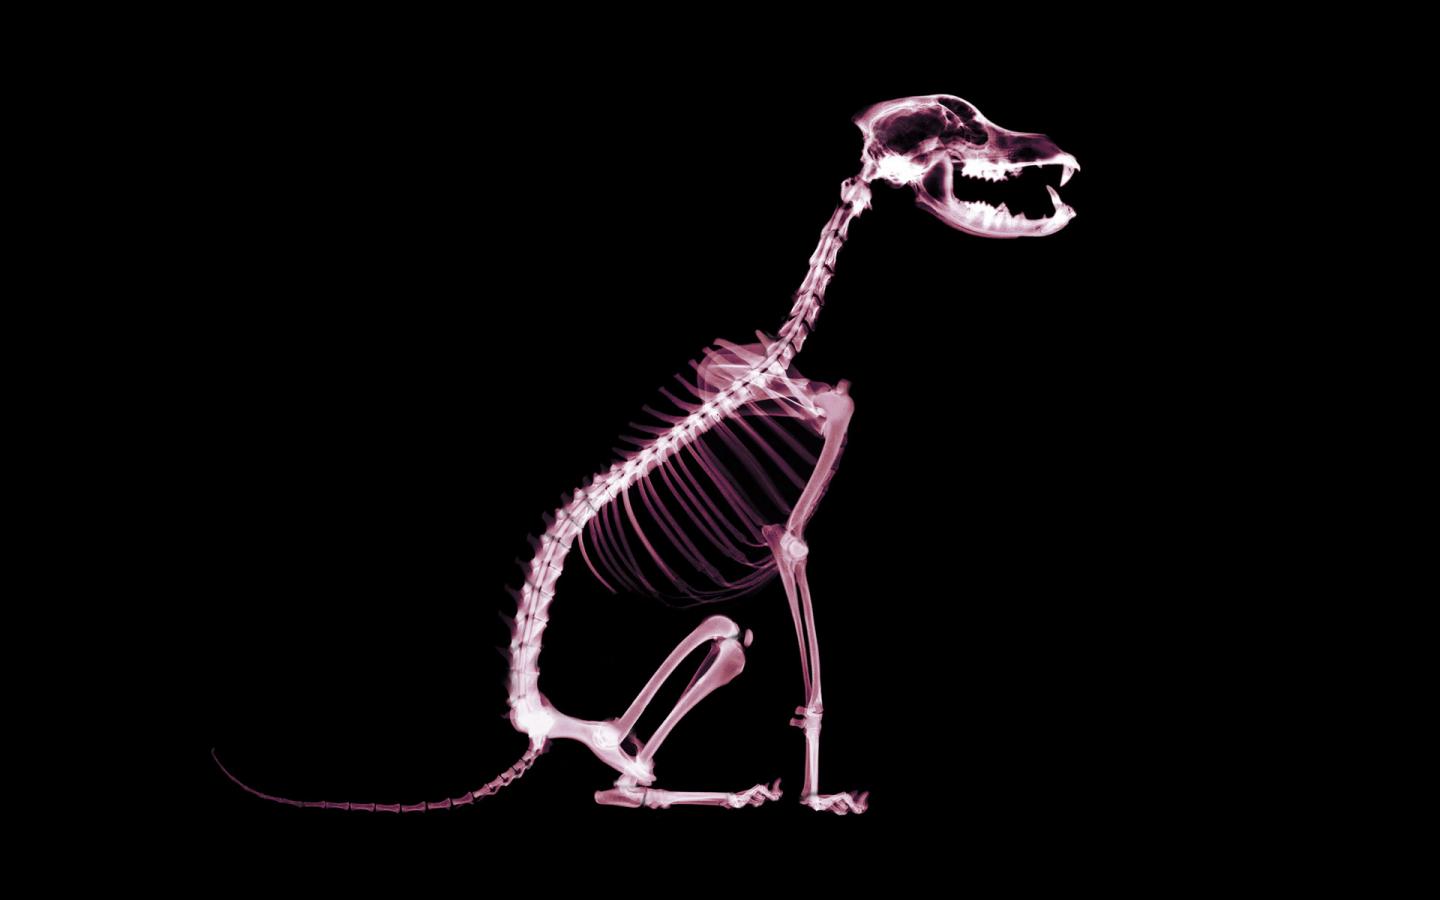 собака, скелет рентген, текстура, фон, скачать фото, dog x-ray texture background